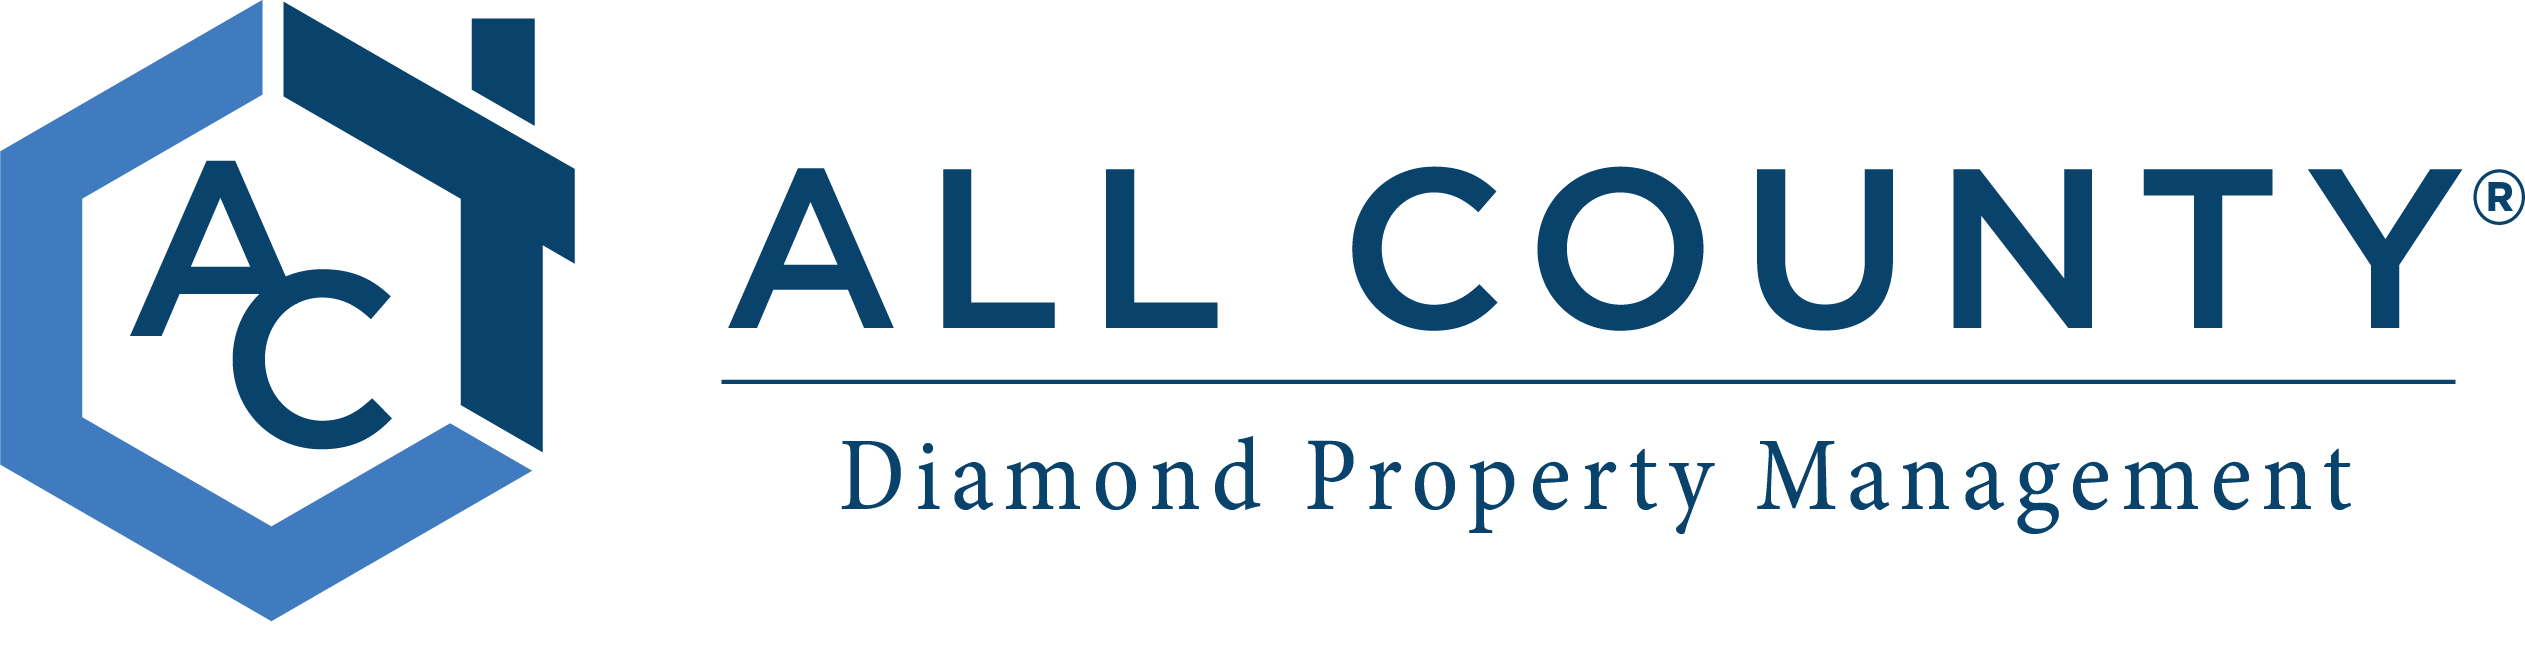 All County Diamond Property Management logo